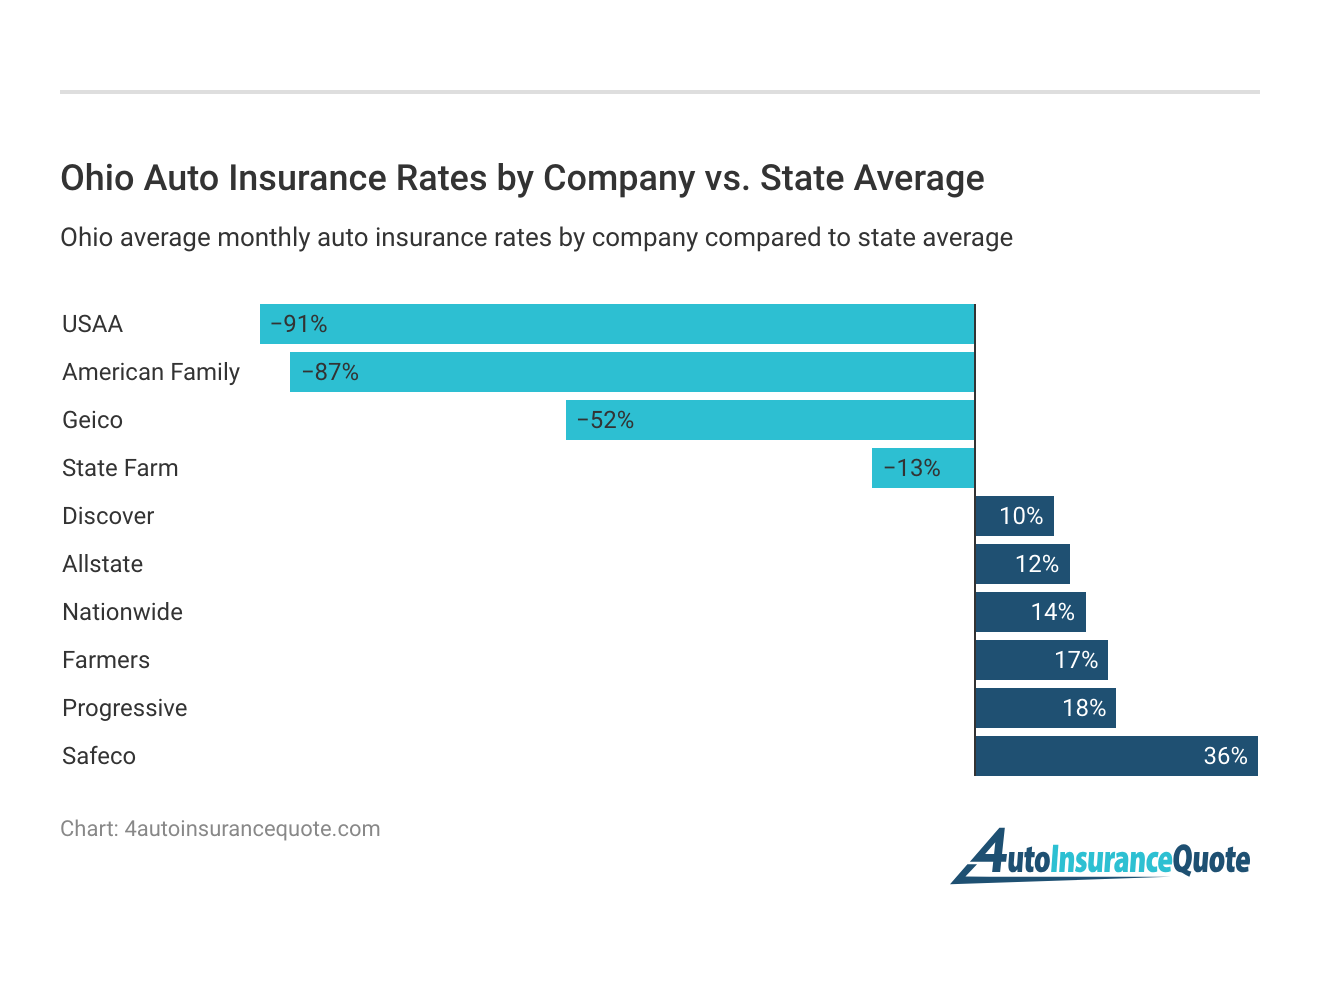 <h3>Ohio Auto Insurance Rates by Company vs. State Average</h3>